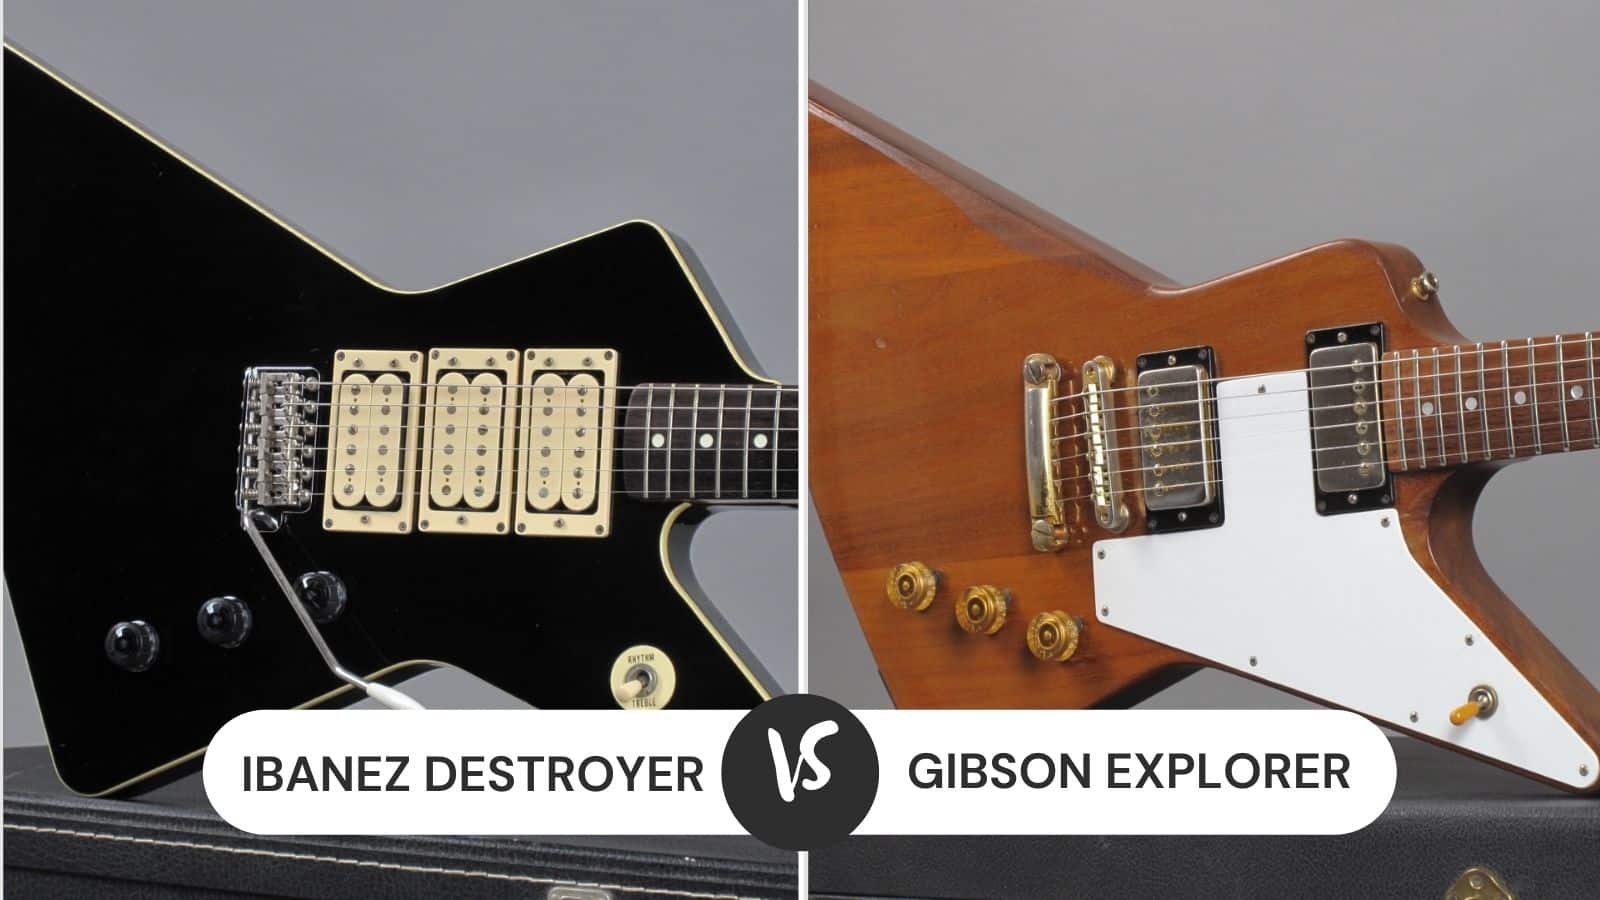 Ibanez Destroyer vs Gibson Explorer